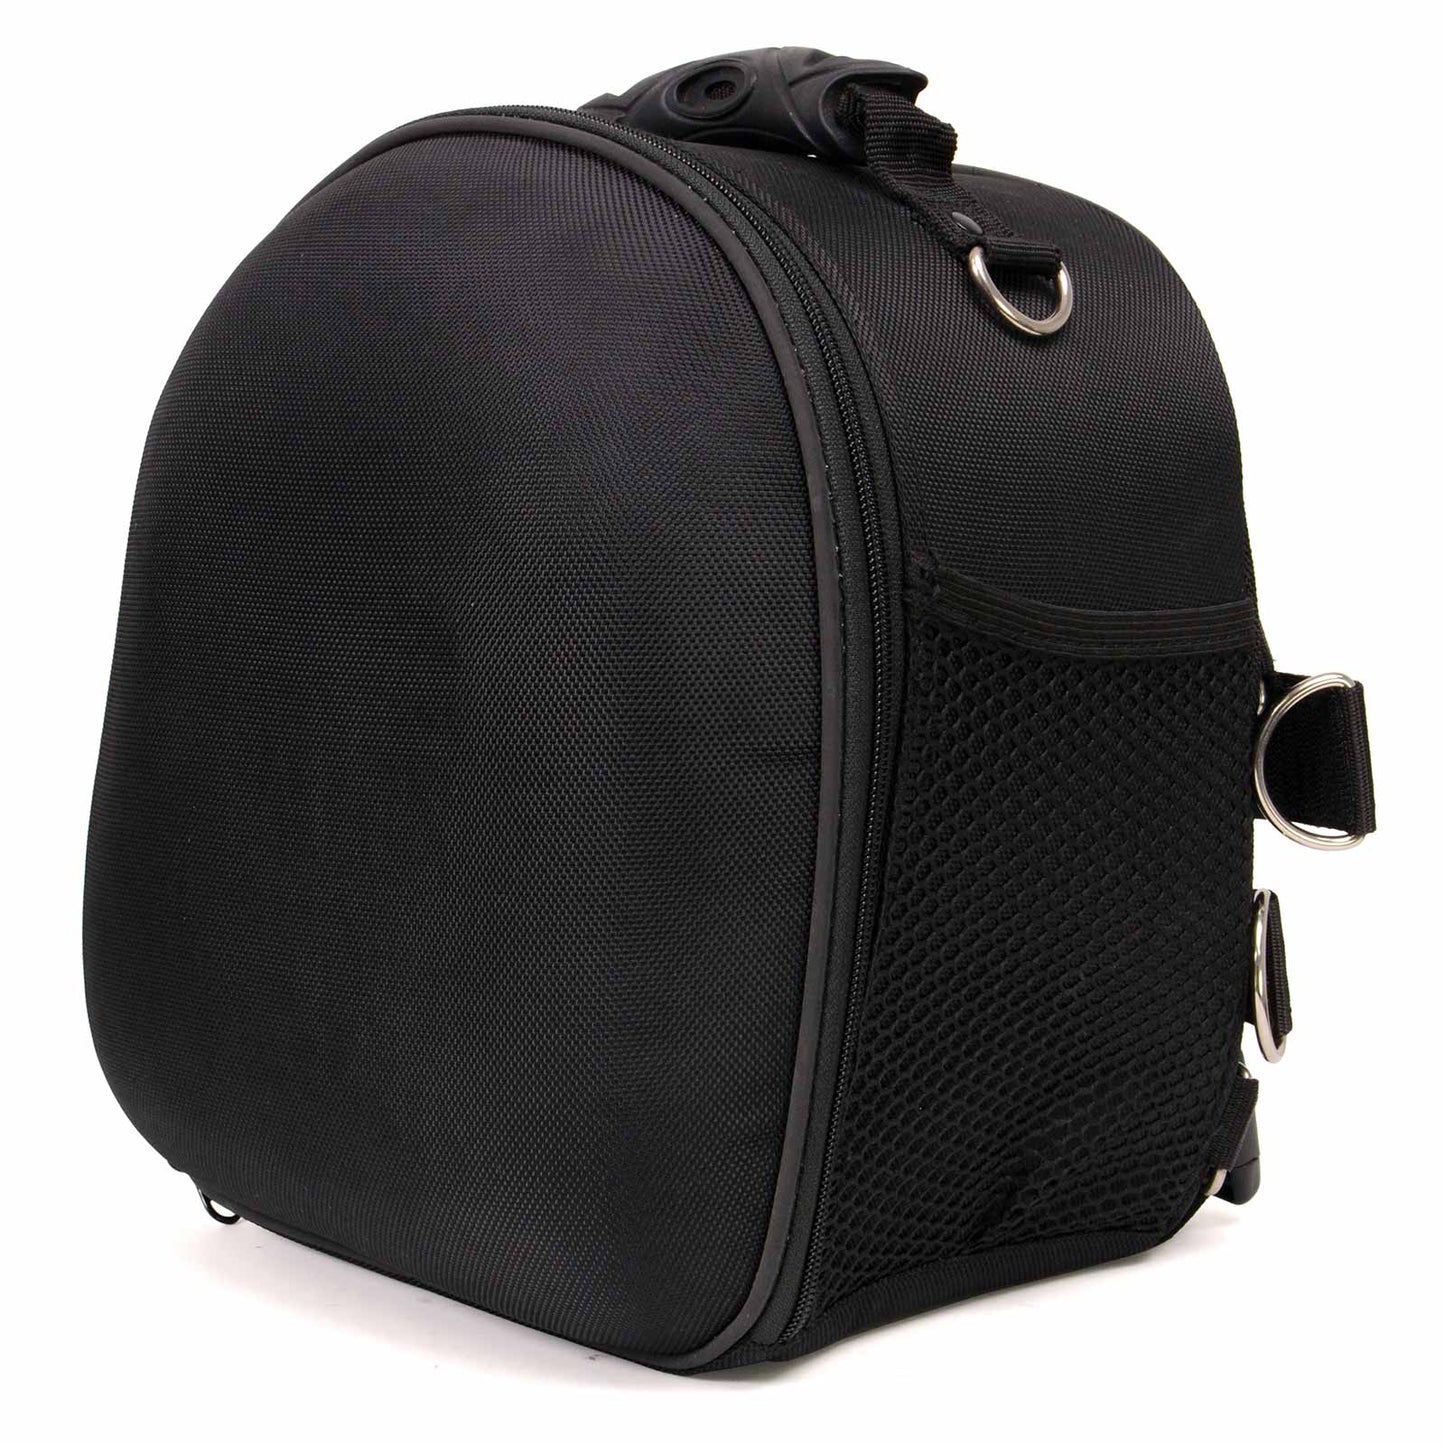 Milwaukee Leather SH687 Medium Size Black Textile Motorcycle Helmet Back Pack Sissy Bar Bag